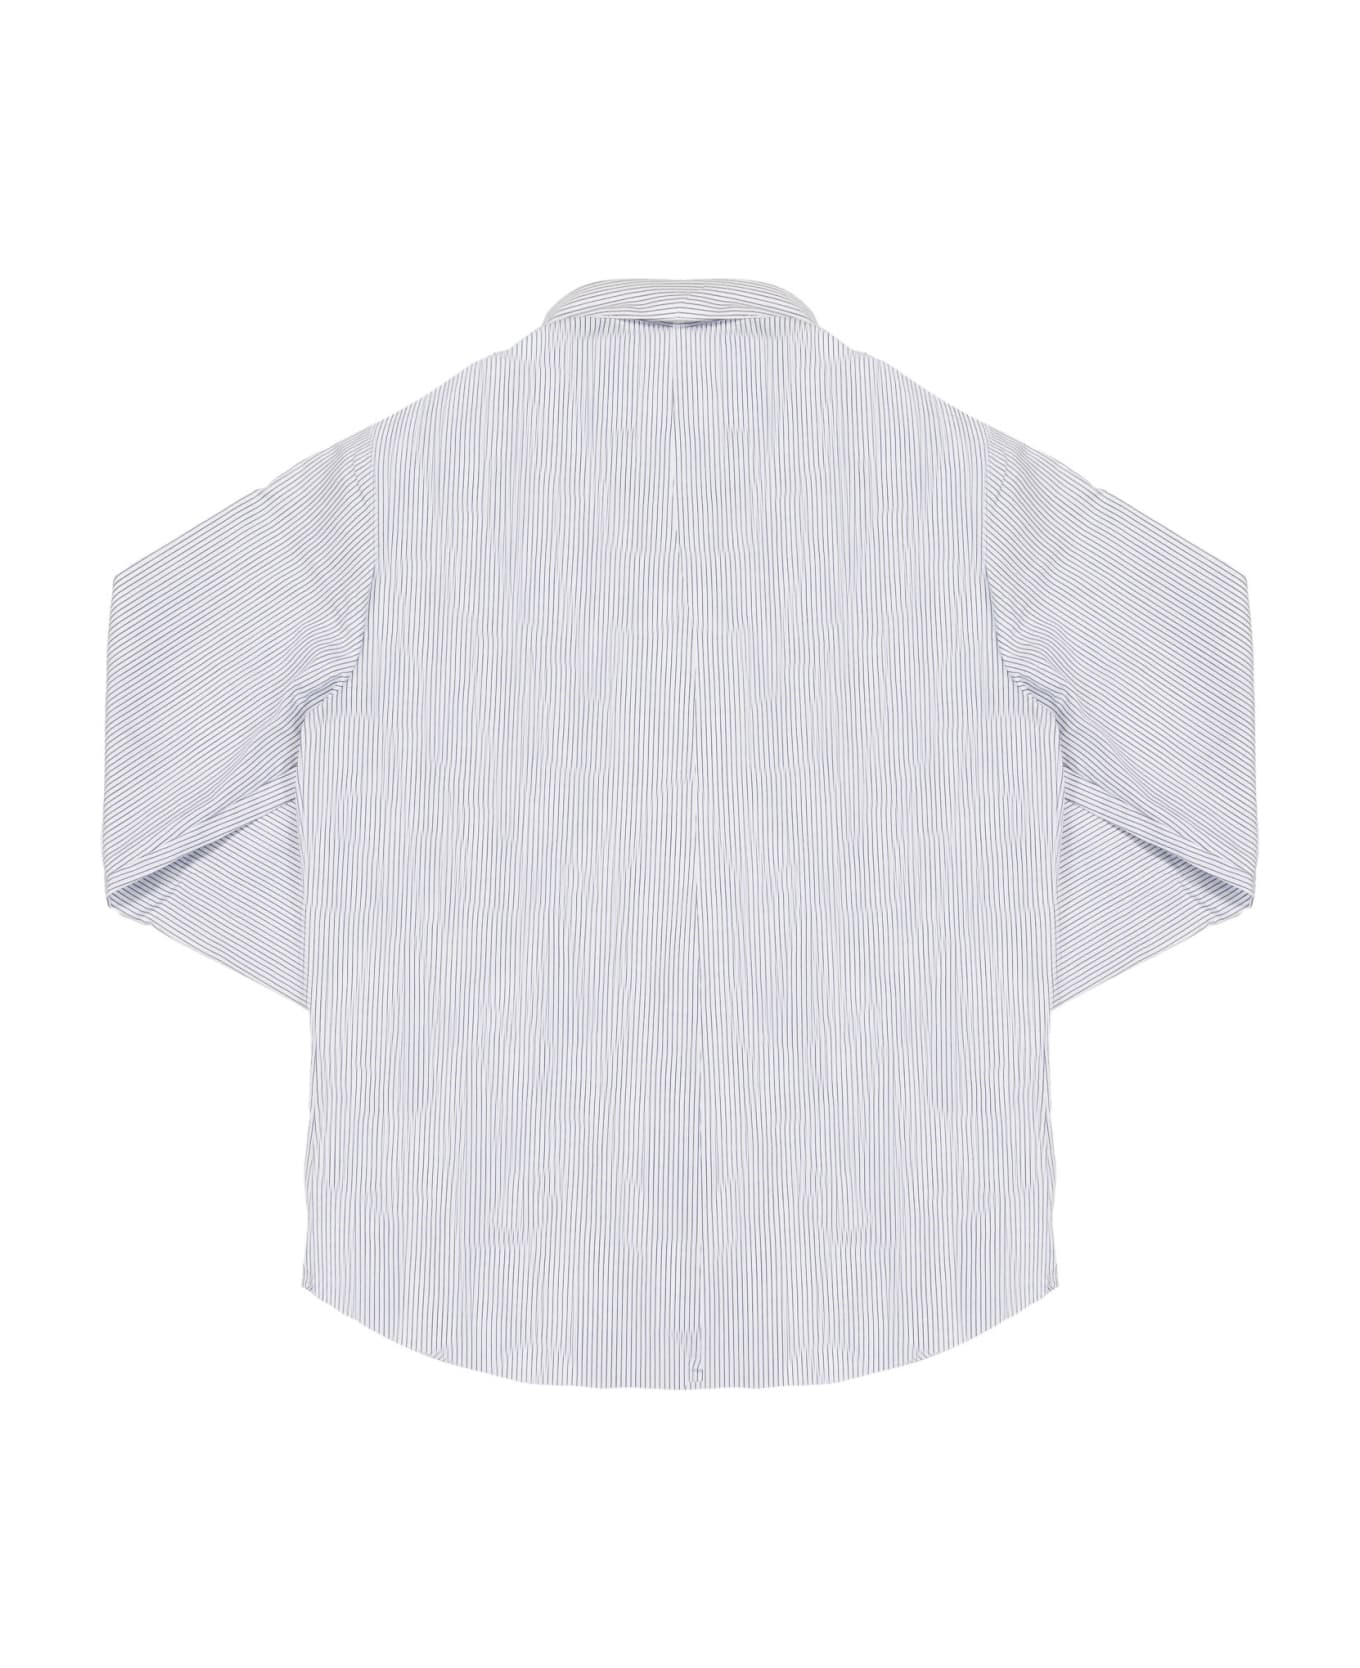 Emporio Armani Cotton Shirt - White